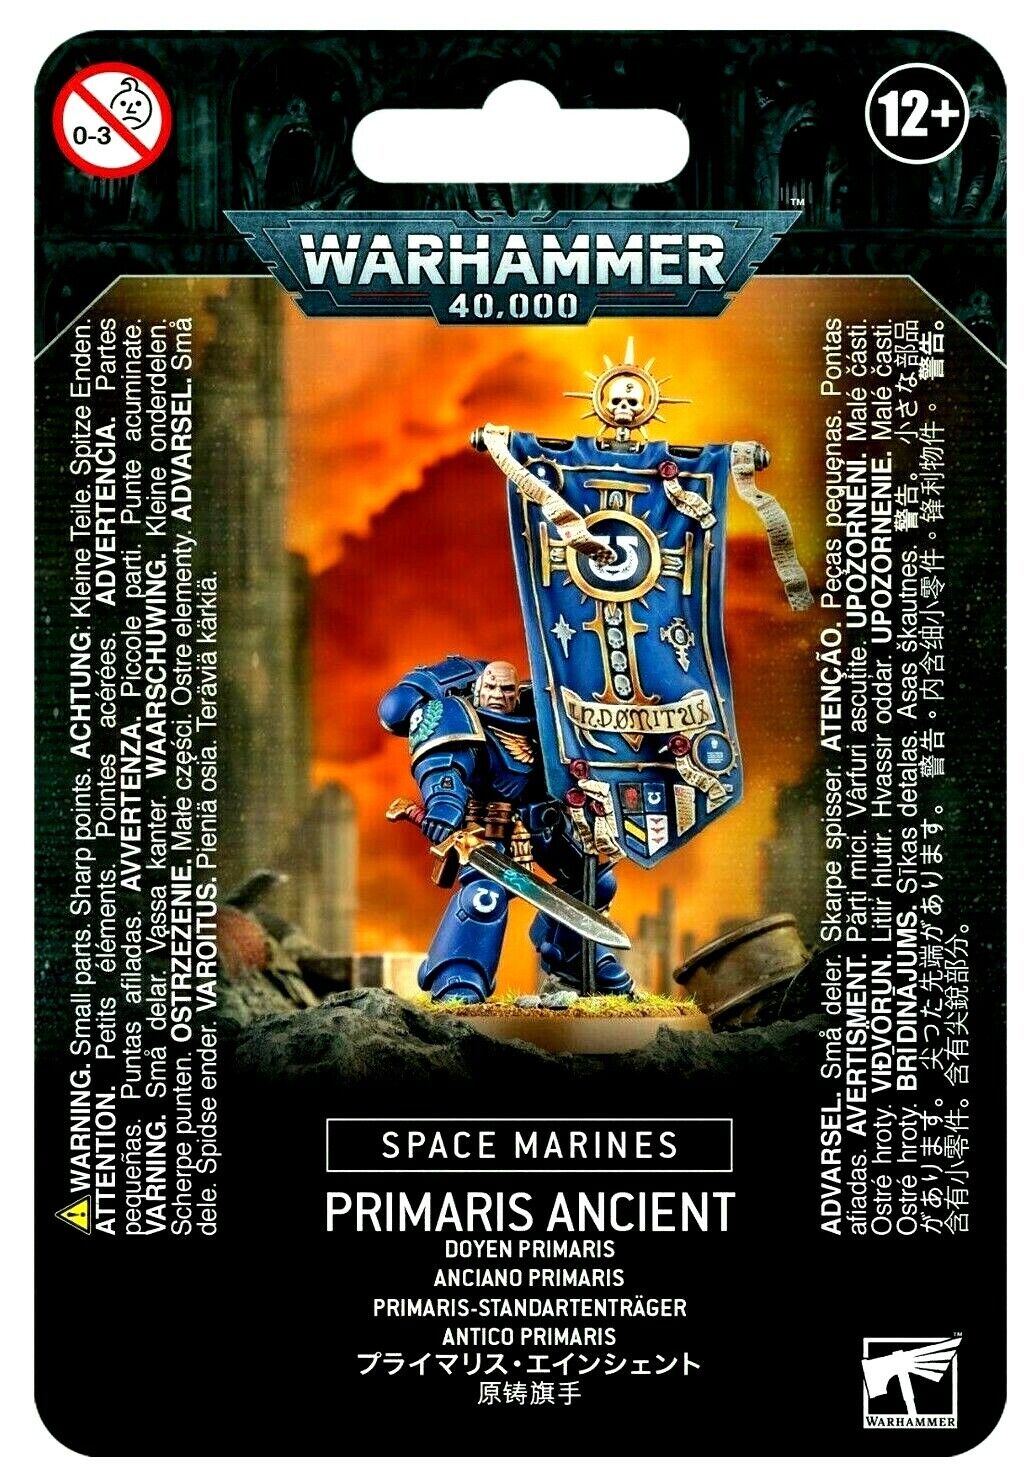 Primaris Ancient Space Marine Warhammer 40K NIB!                         WBGames